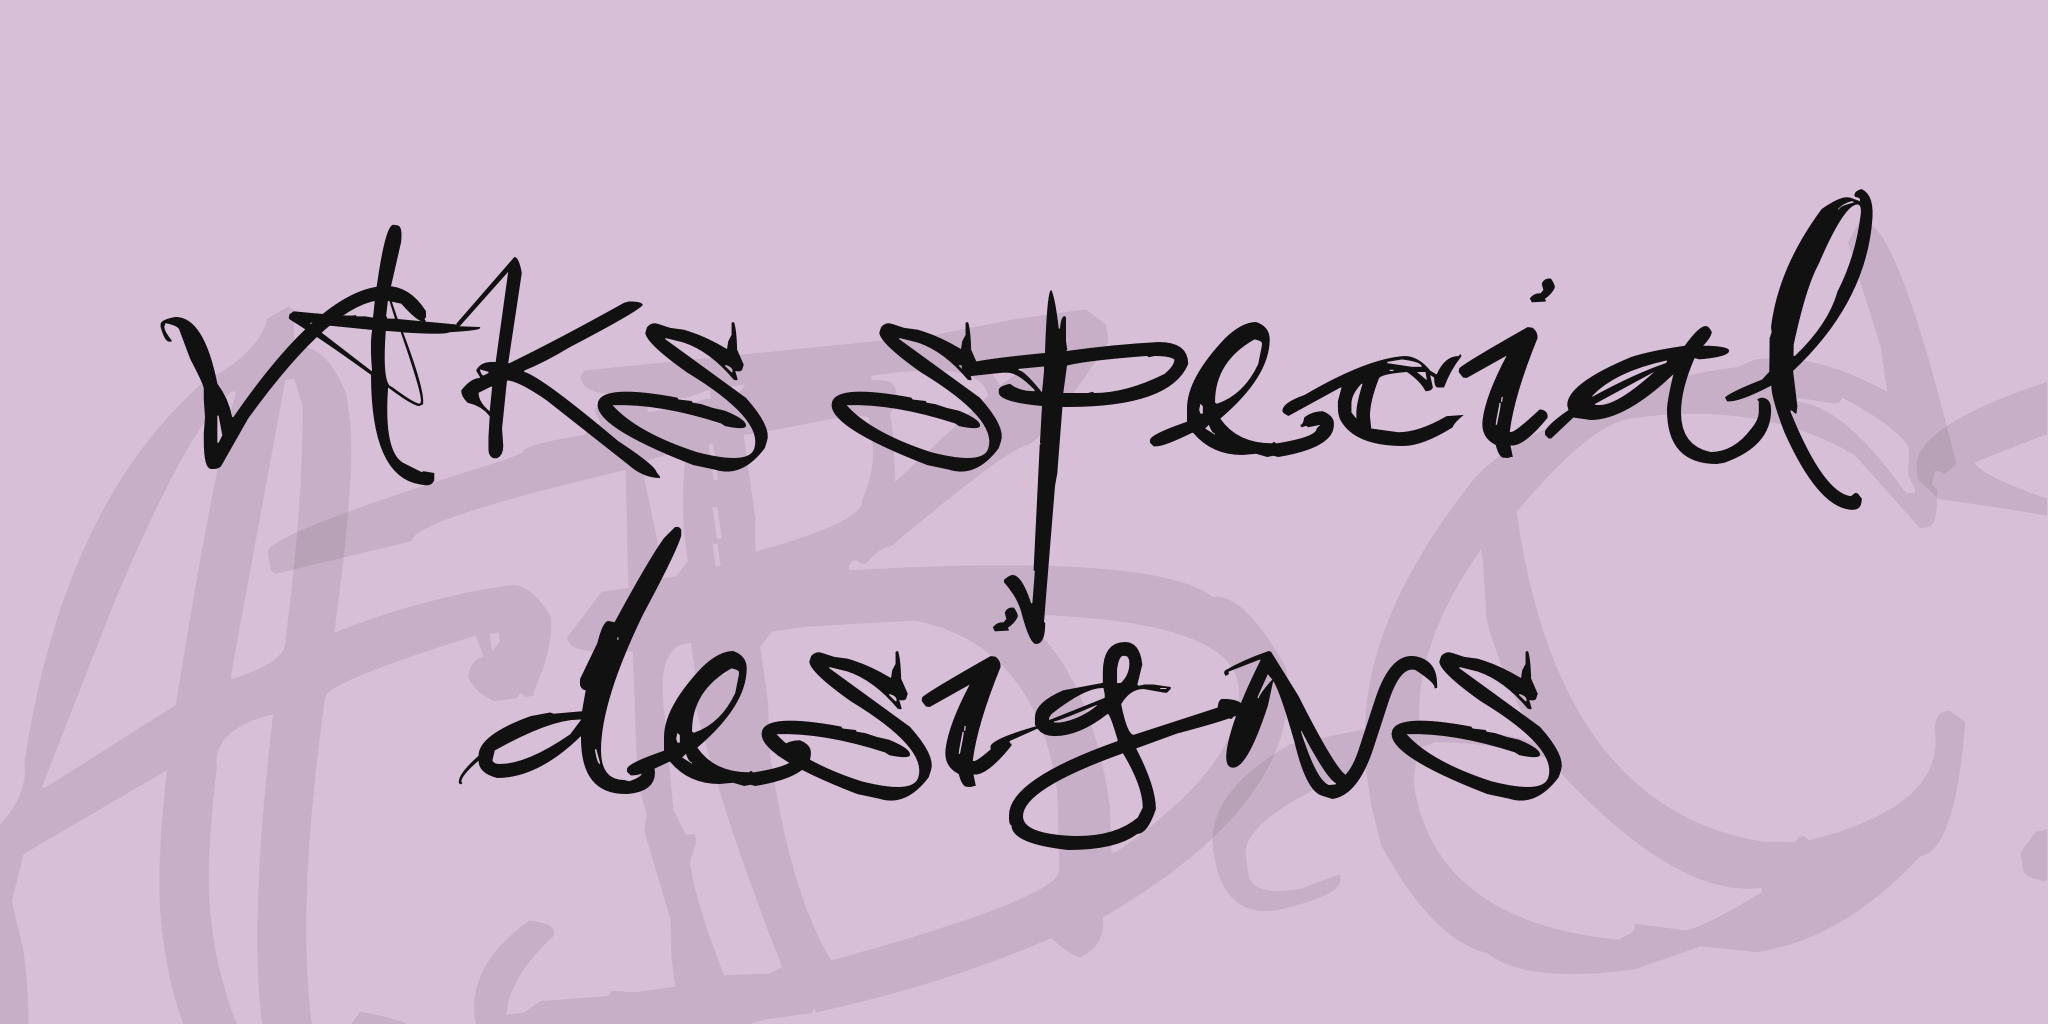 Vtks Special Designs